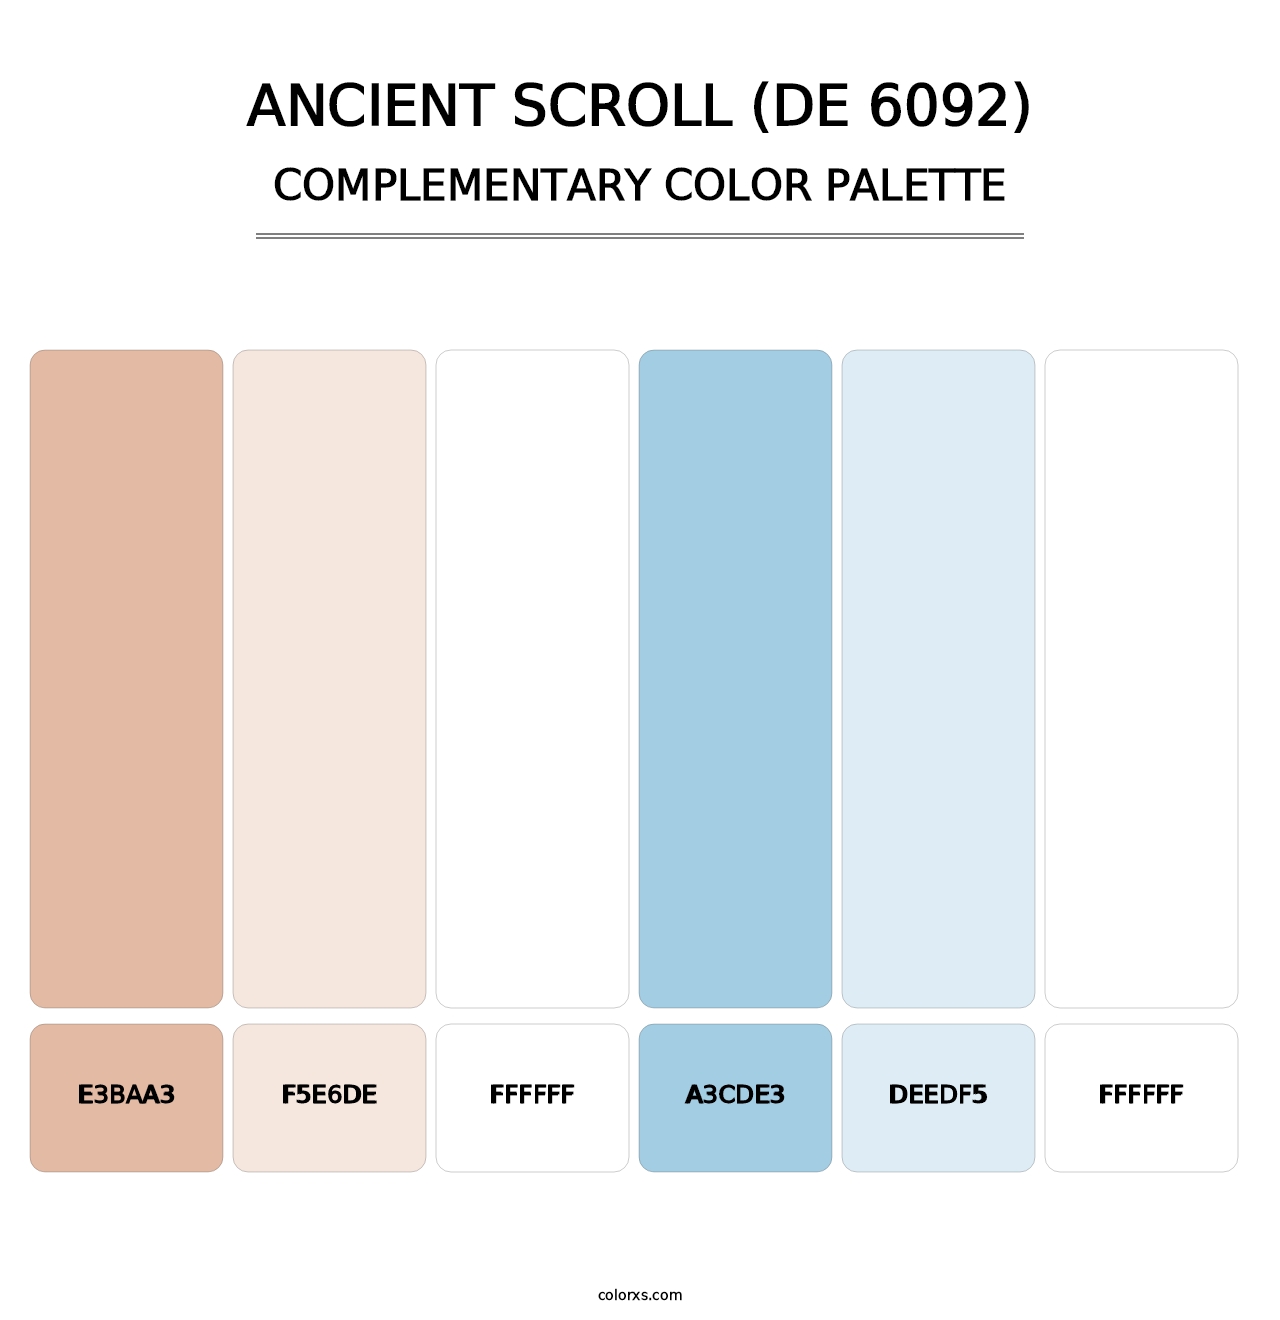 Ancient Scroll (DE 6092) - Complementary Color Palette